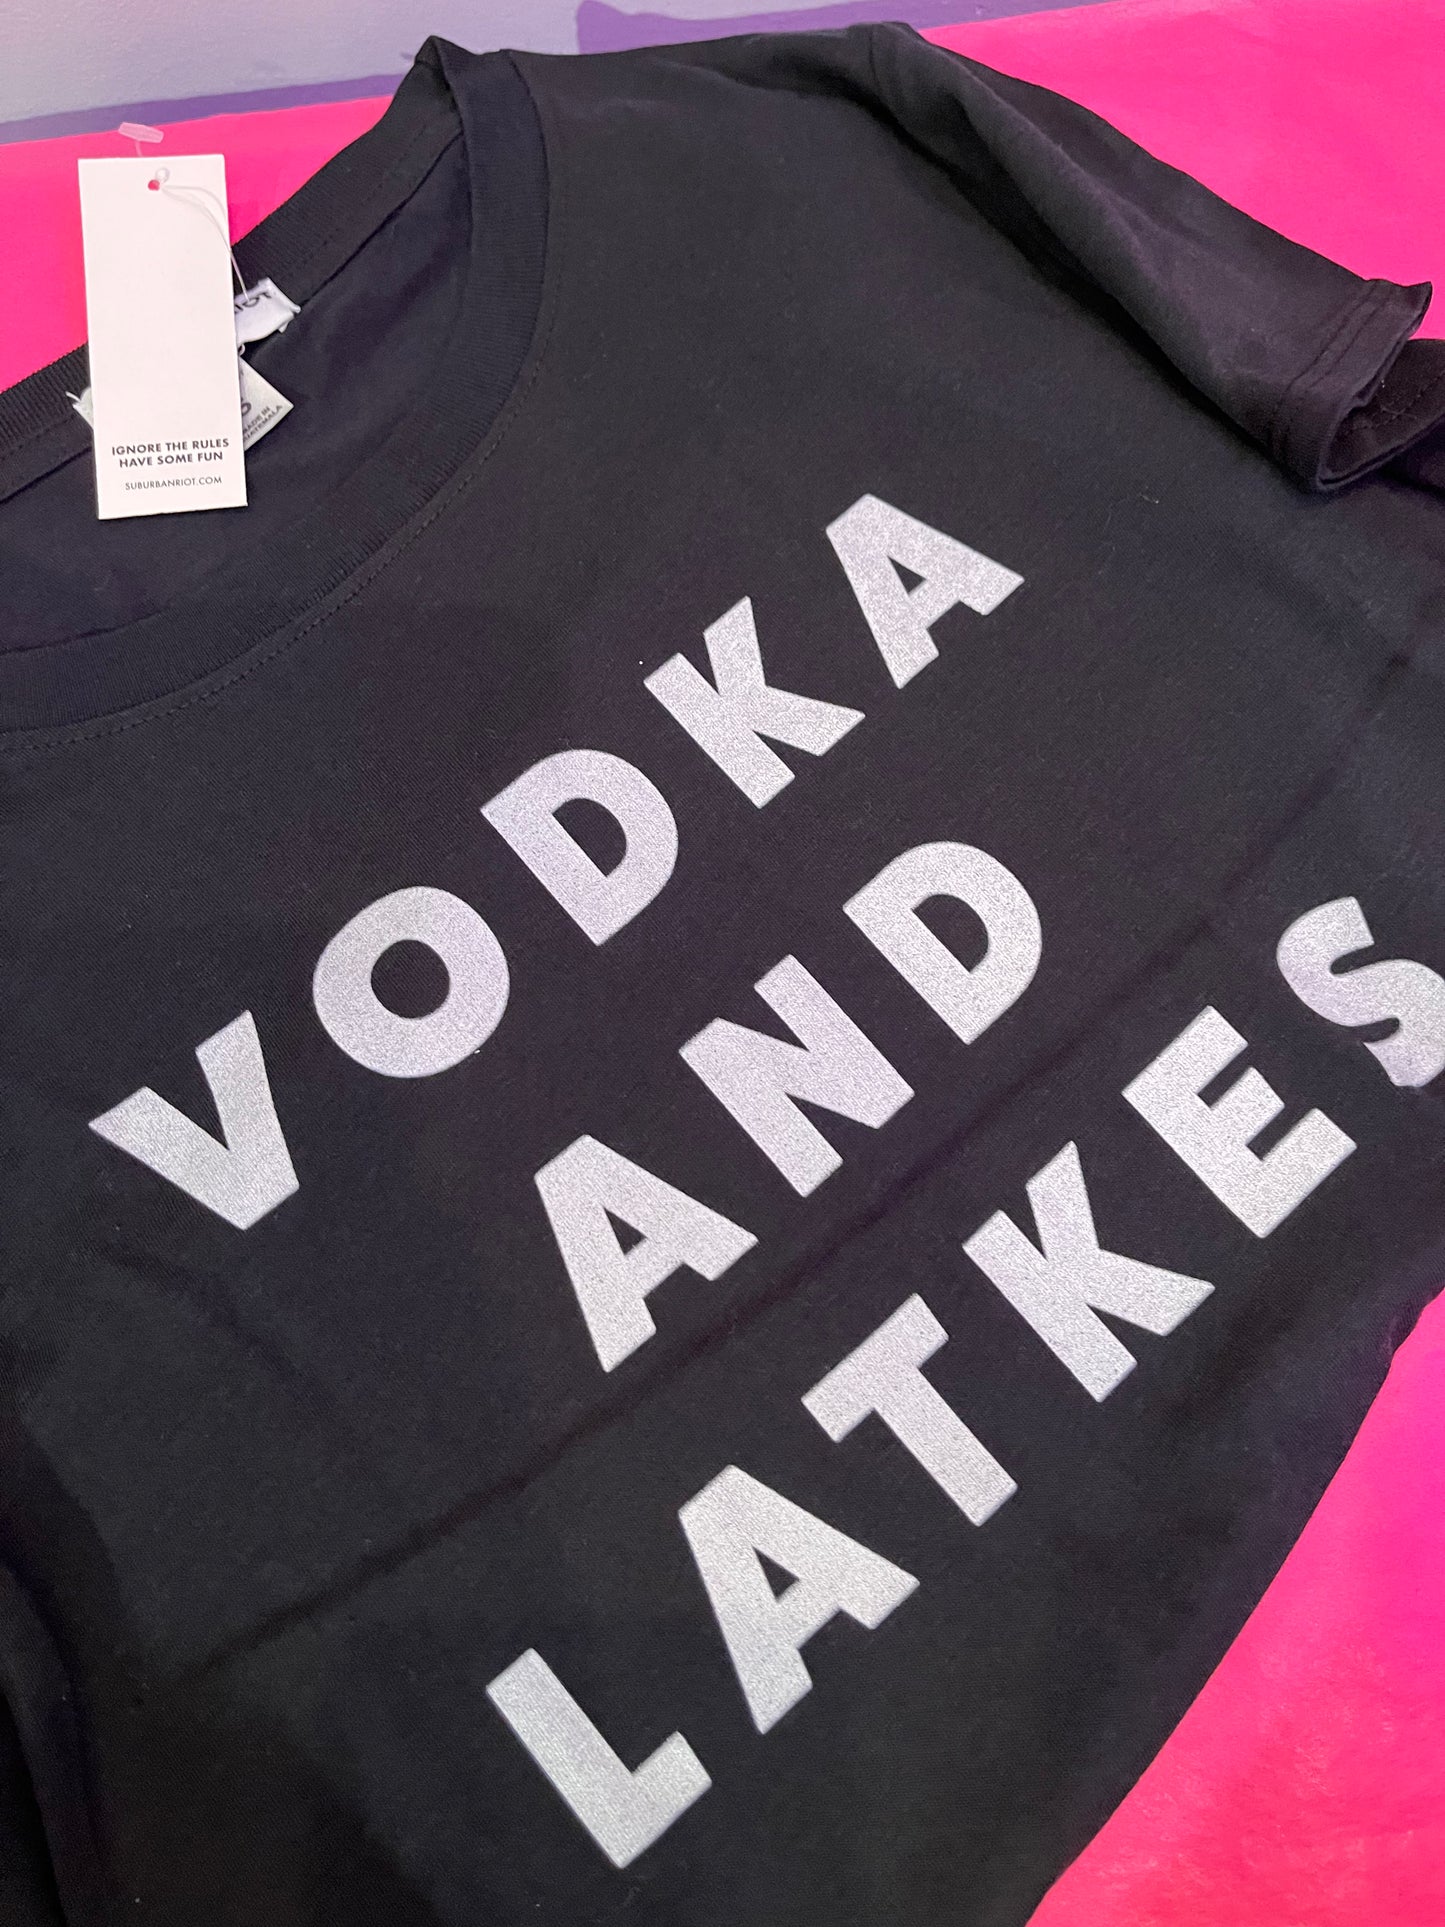 Vodka And Latkes